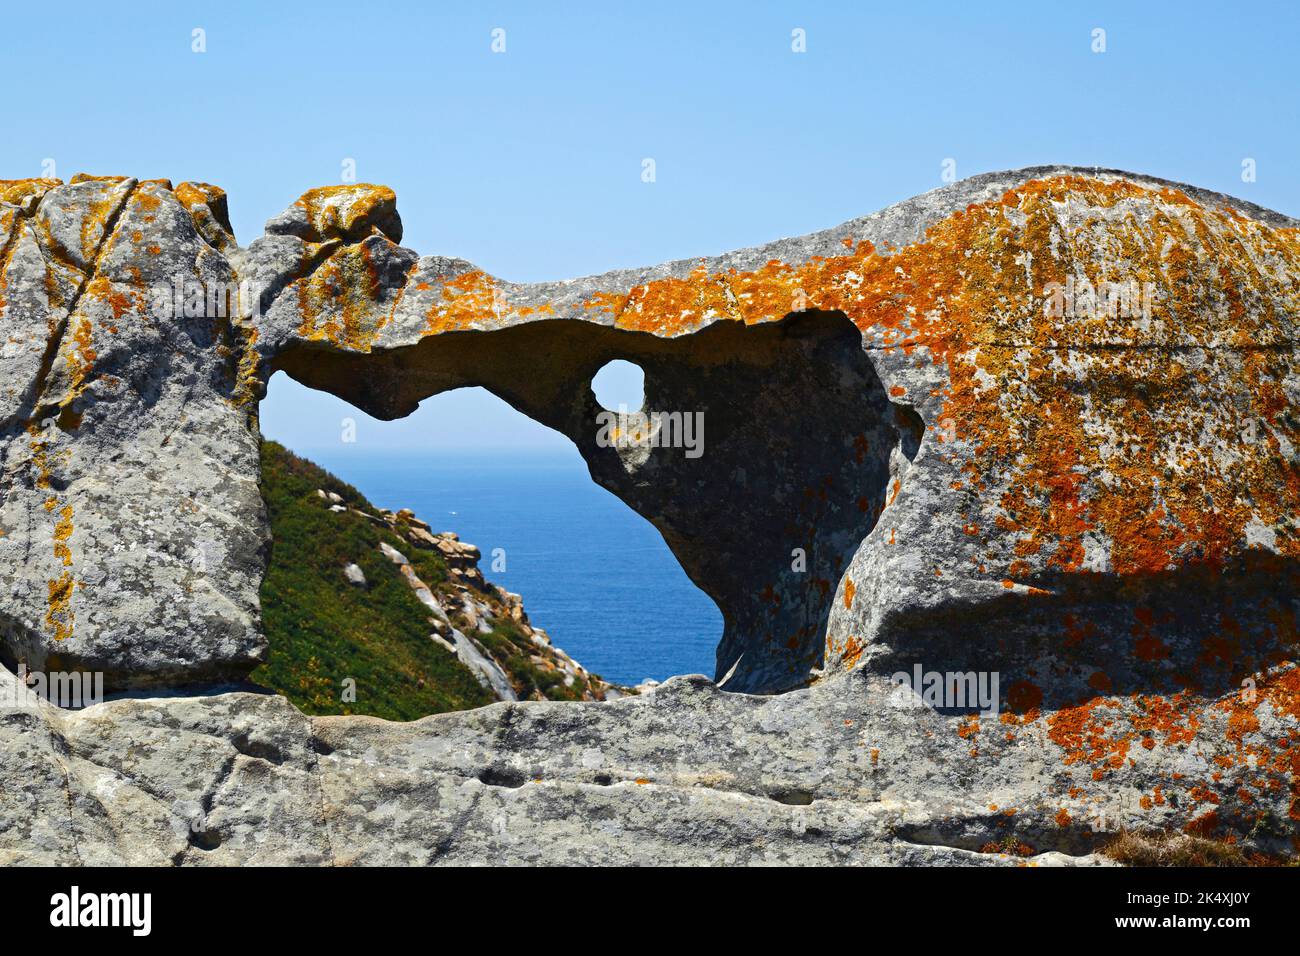 The Pedra da Campa rock formation on Illa de Faro or Montefaro; the central of the 3 main islands that make up the Cies Islands,Galicia, Spain. Stock Photo